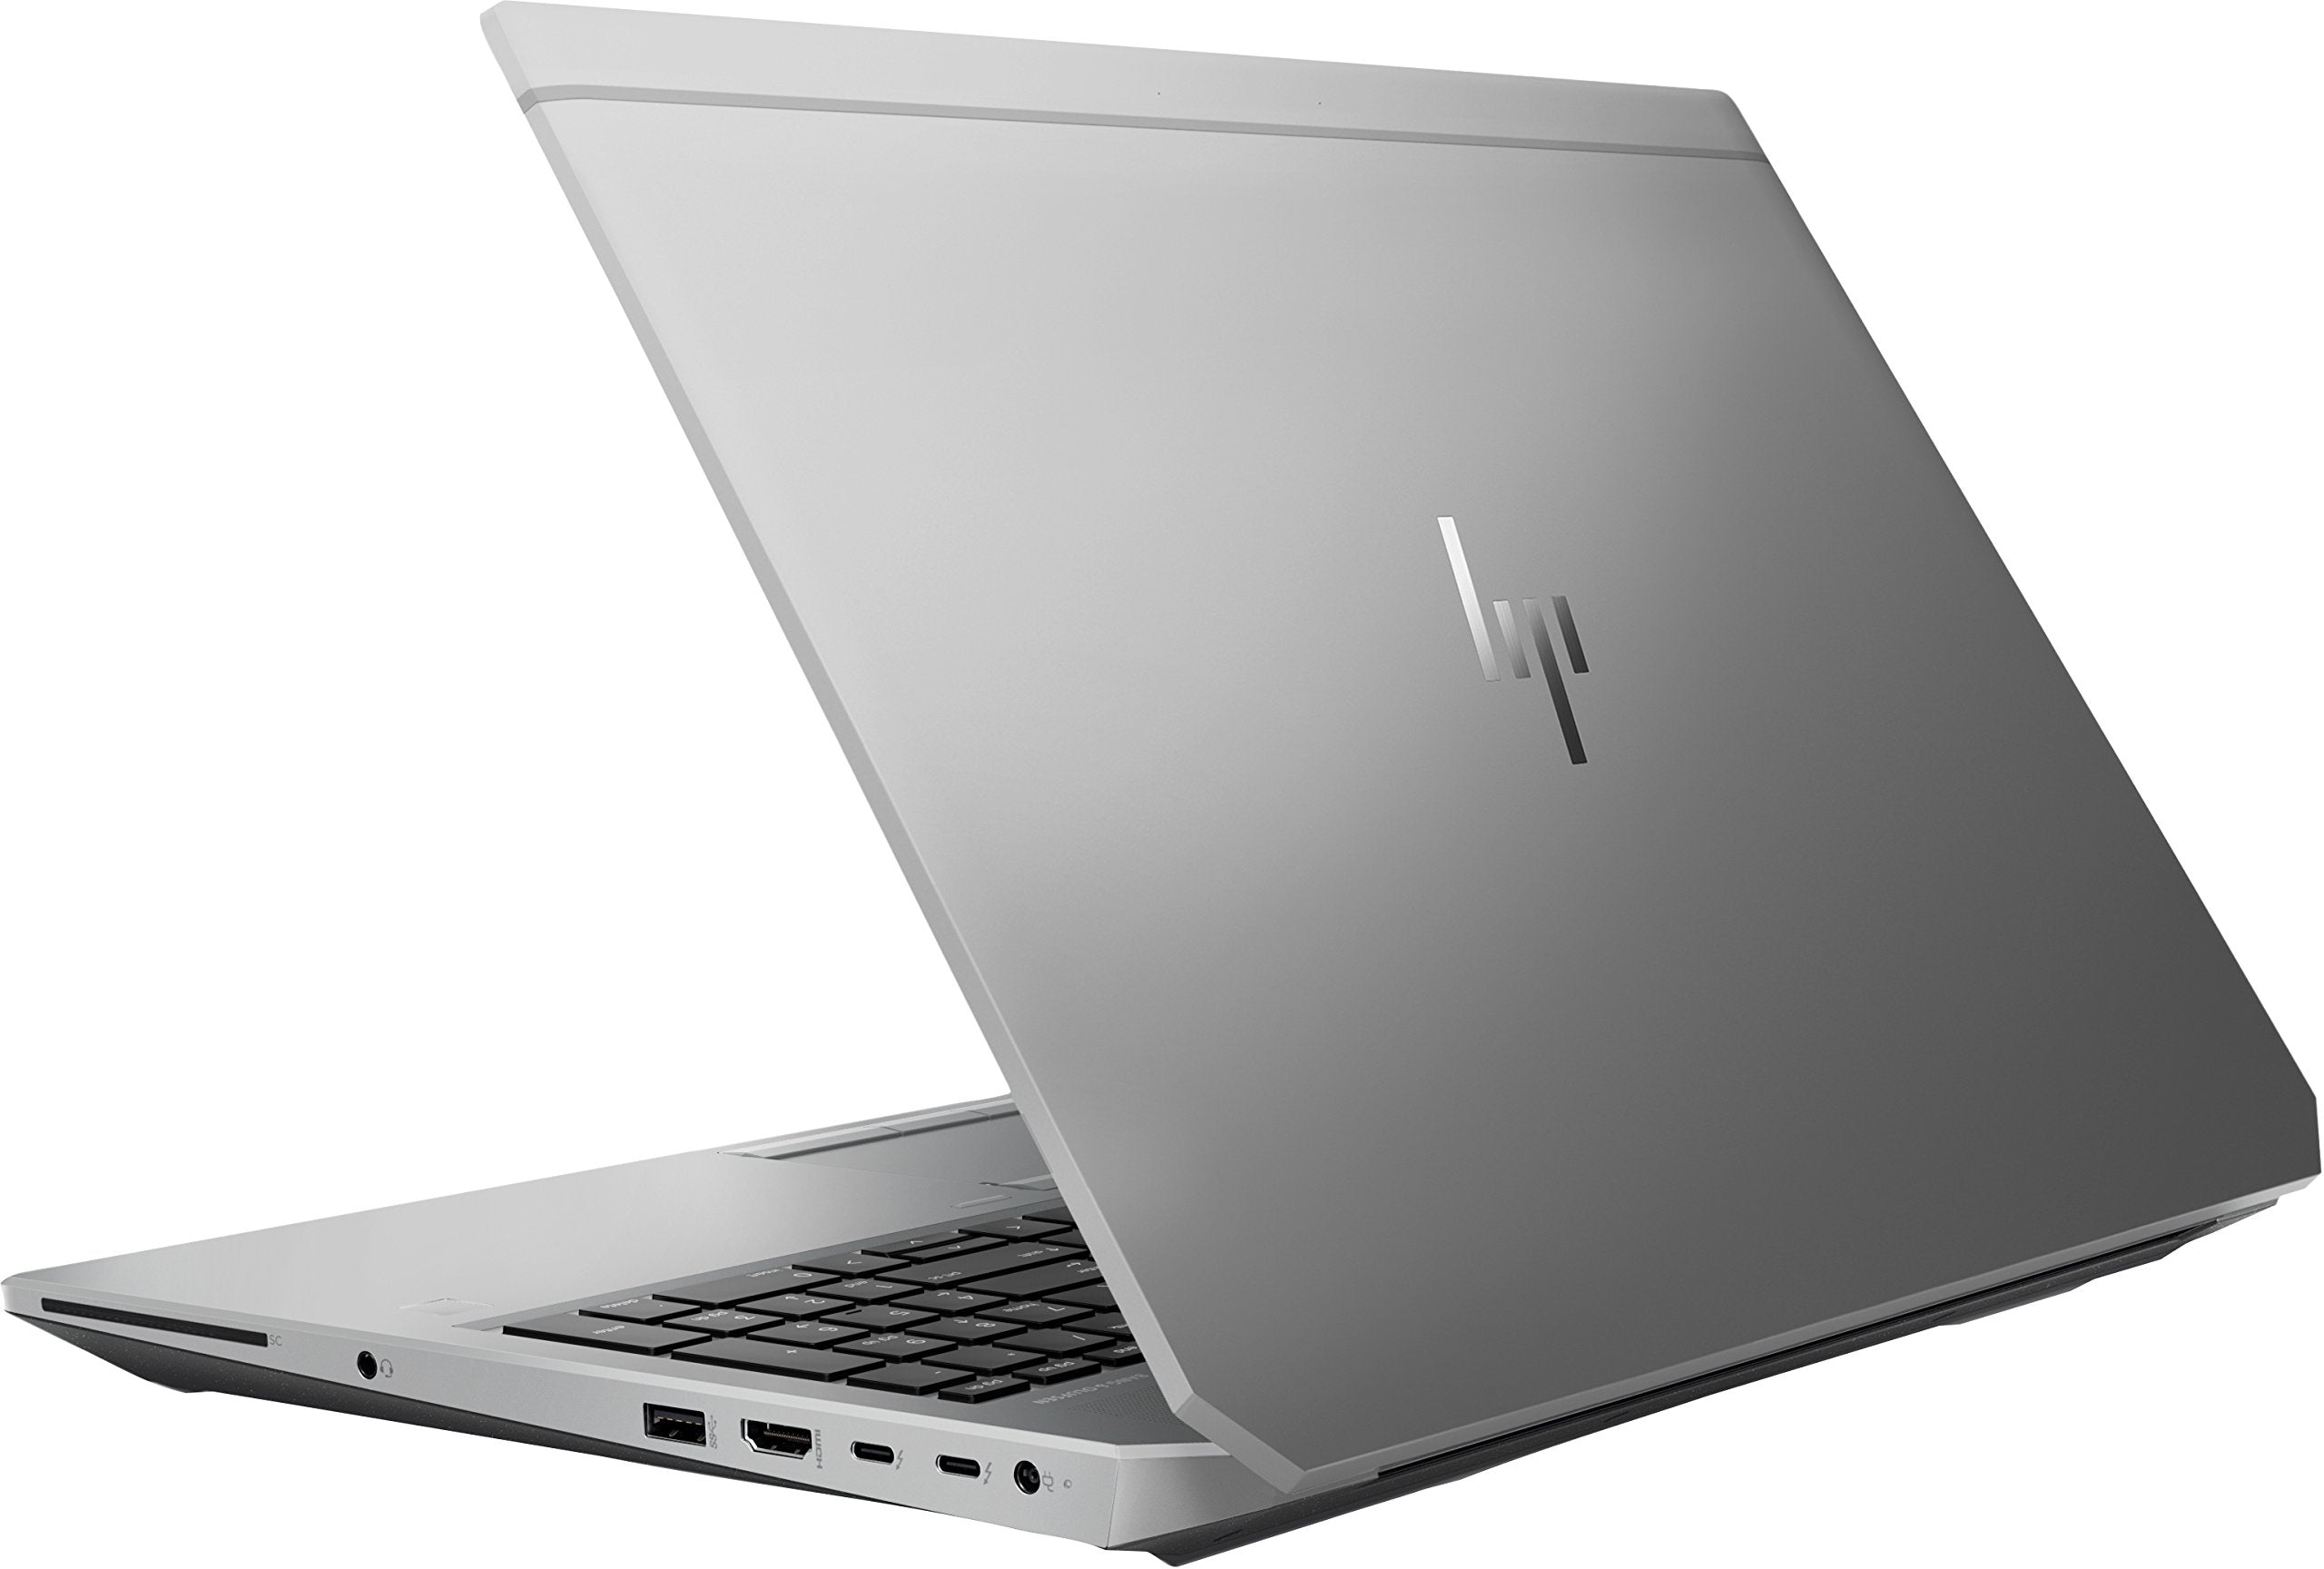 HP ZBook 15 G5, 15.6", 32GB DDR4, 1TB NVMe Laptop - i7-8550H (6 Cores, 4.30GHz), Quadro P1000, vPro, Fingerprint & Smart Card Reader, WiFi 5 & BT 5, Win 10 Pro, Backlit Keyboard - 3AX07AV